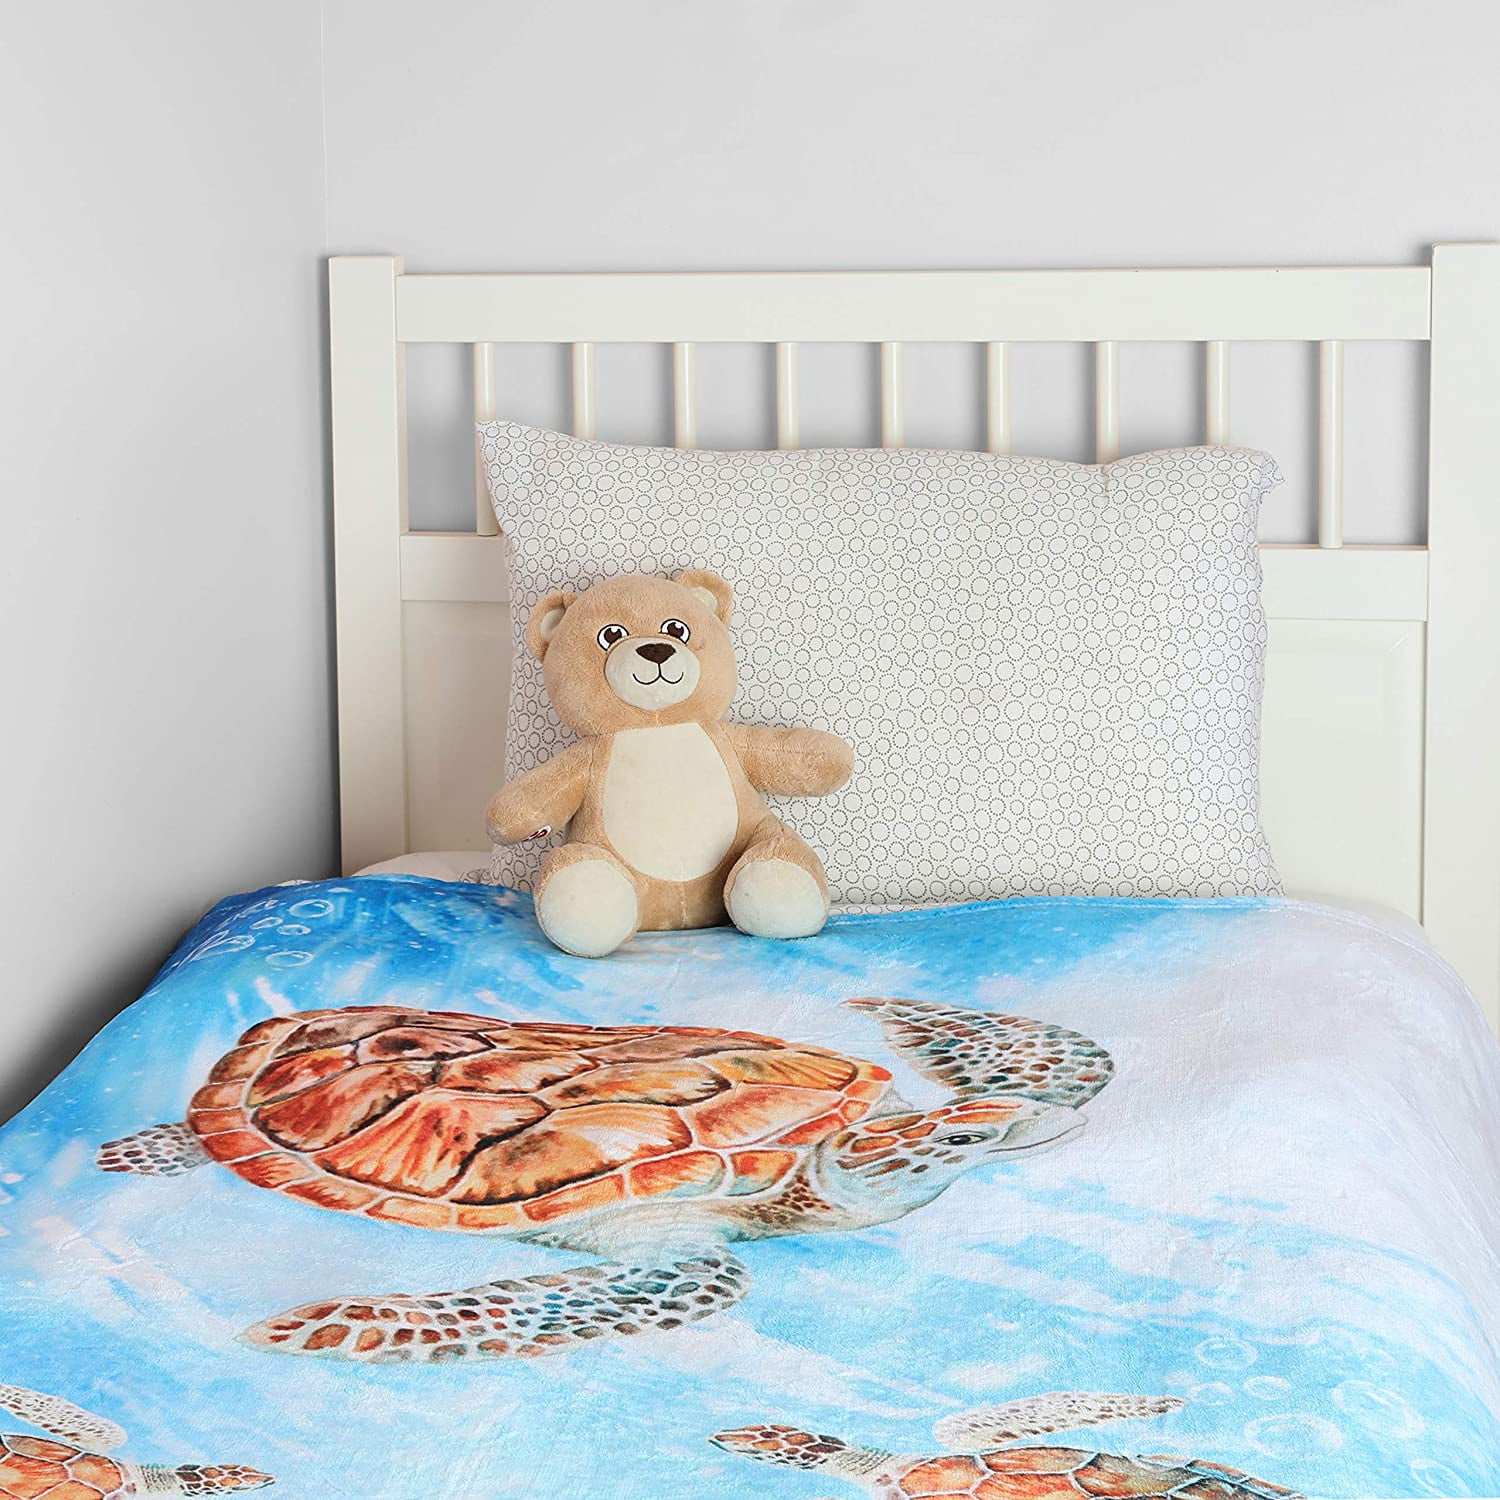 Koltose by Mash - Teddy Bear Throw Blanket, Fleece Fabric, XL 50x 60, Machine Washable, Size: 60 x 50 Inches